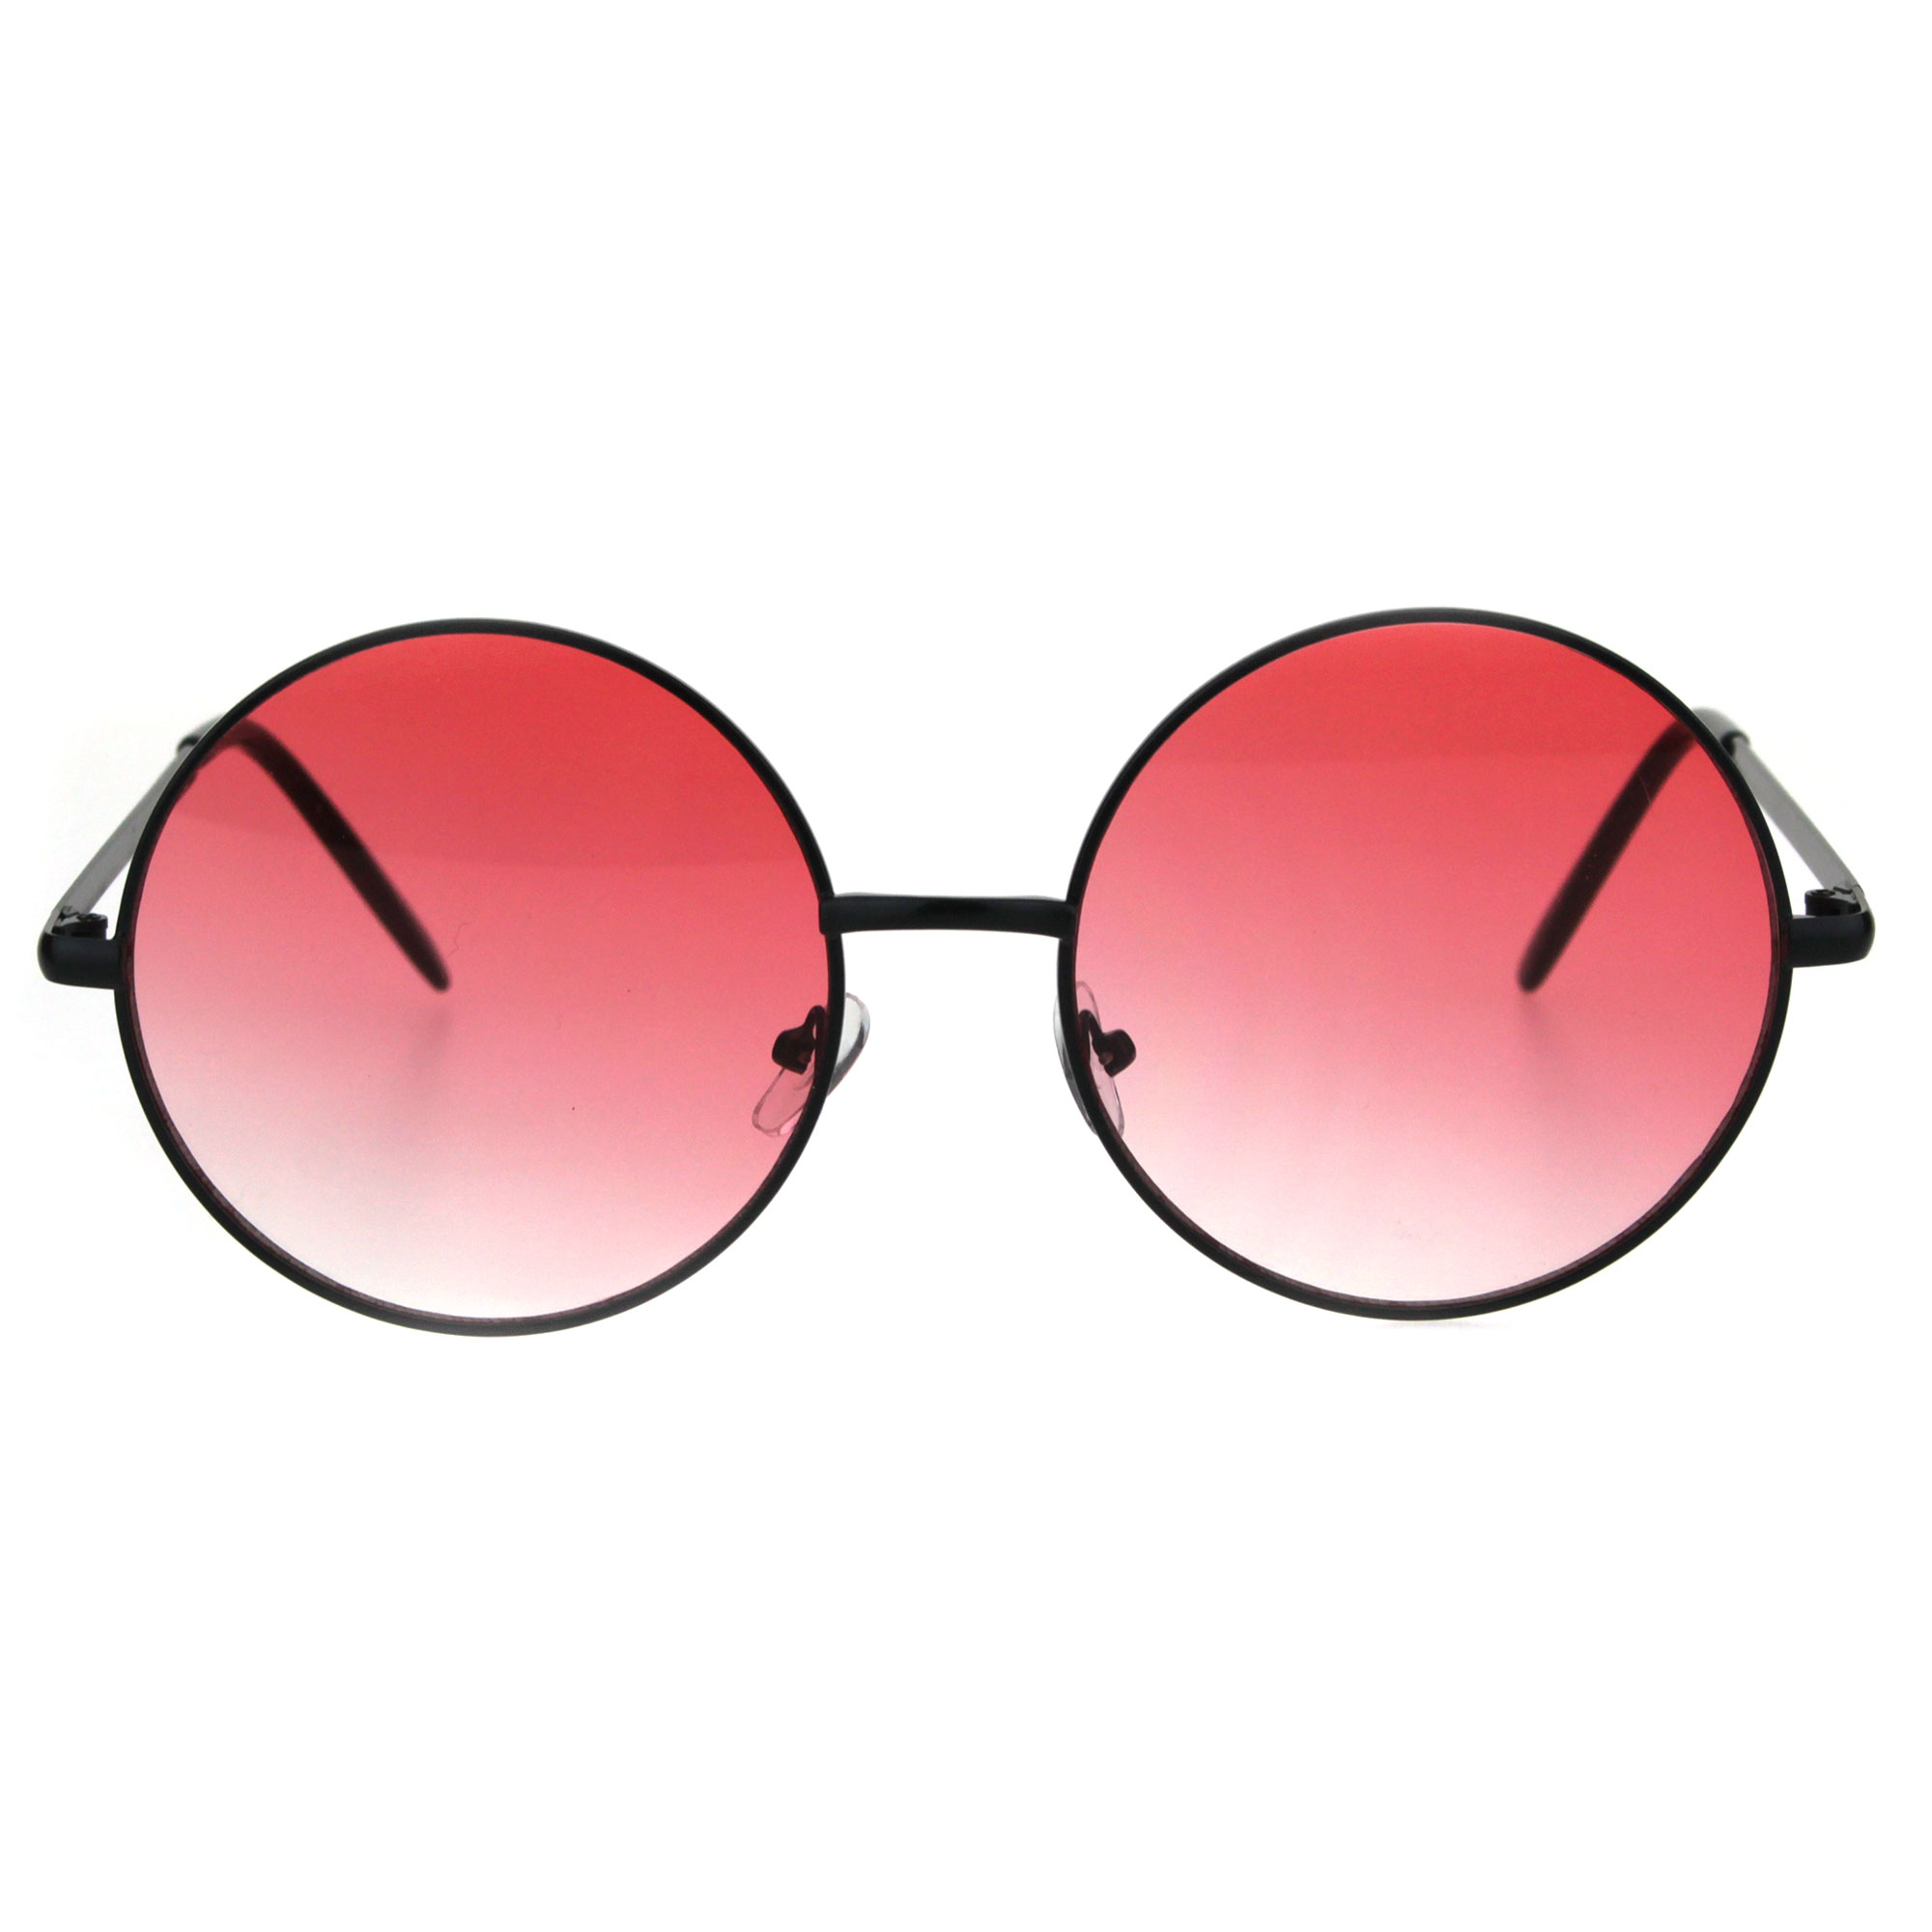 Round Circle Lens Hippie Metal Rim Gradient Sunglasses Black Red - image 1 of 4